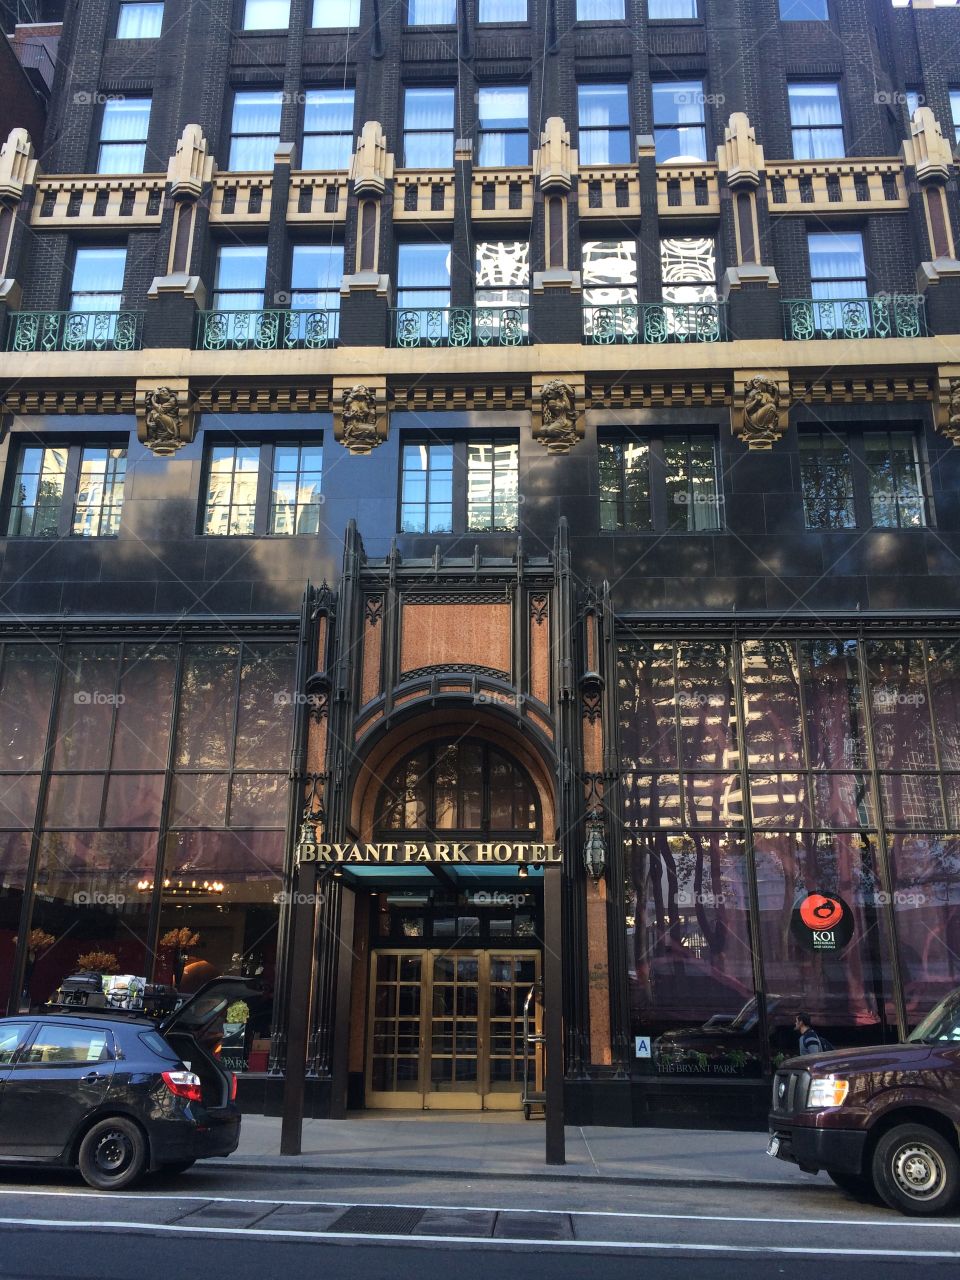 Gold Hotel - New York City